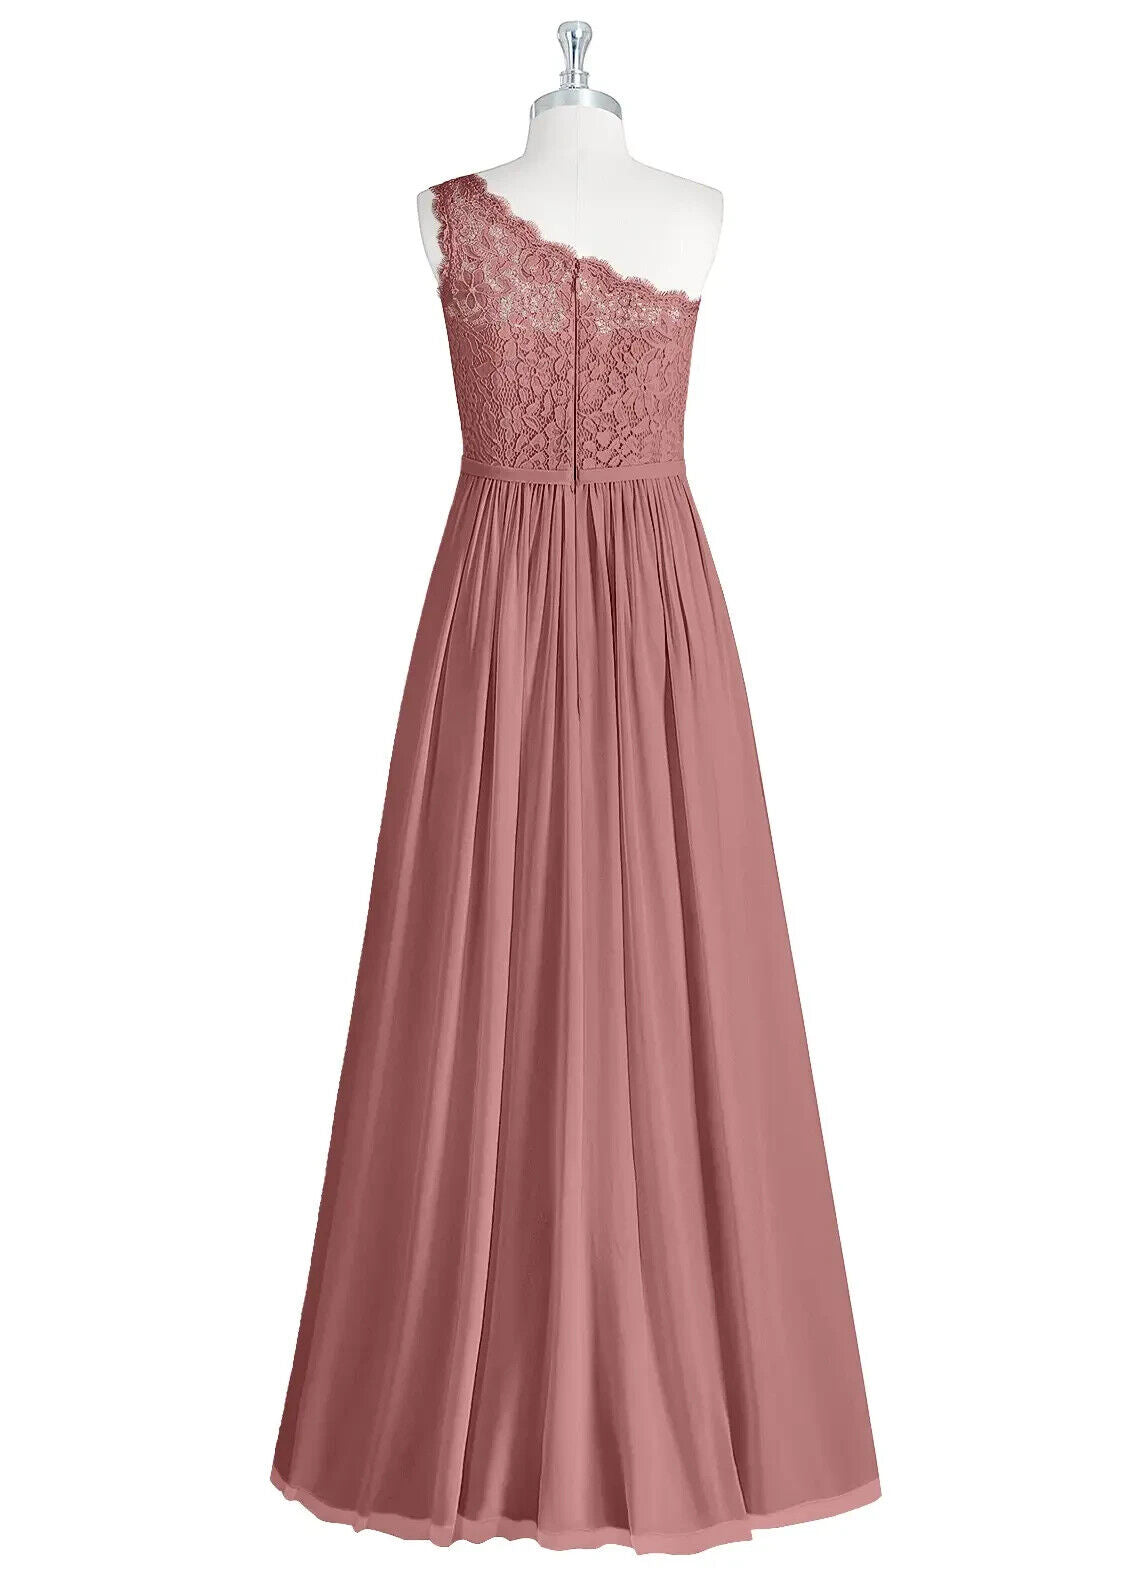 Azazie Womens 8 Demi Bridesmaid Dress Dusty Rose Pink Lace Bridal A8